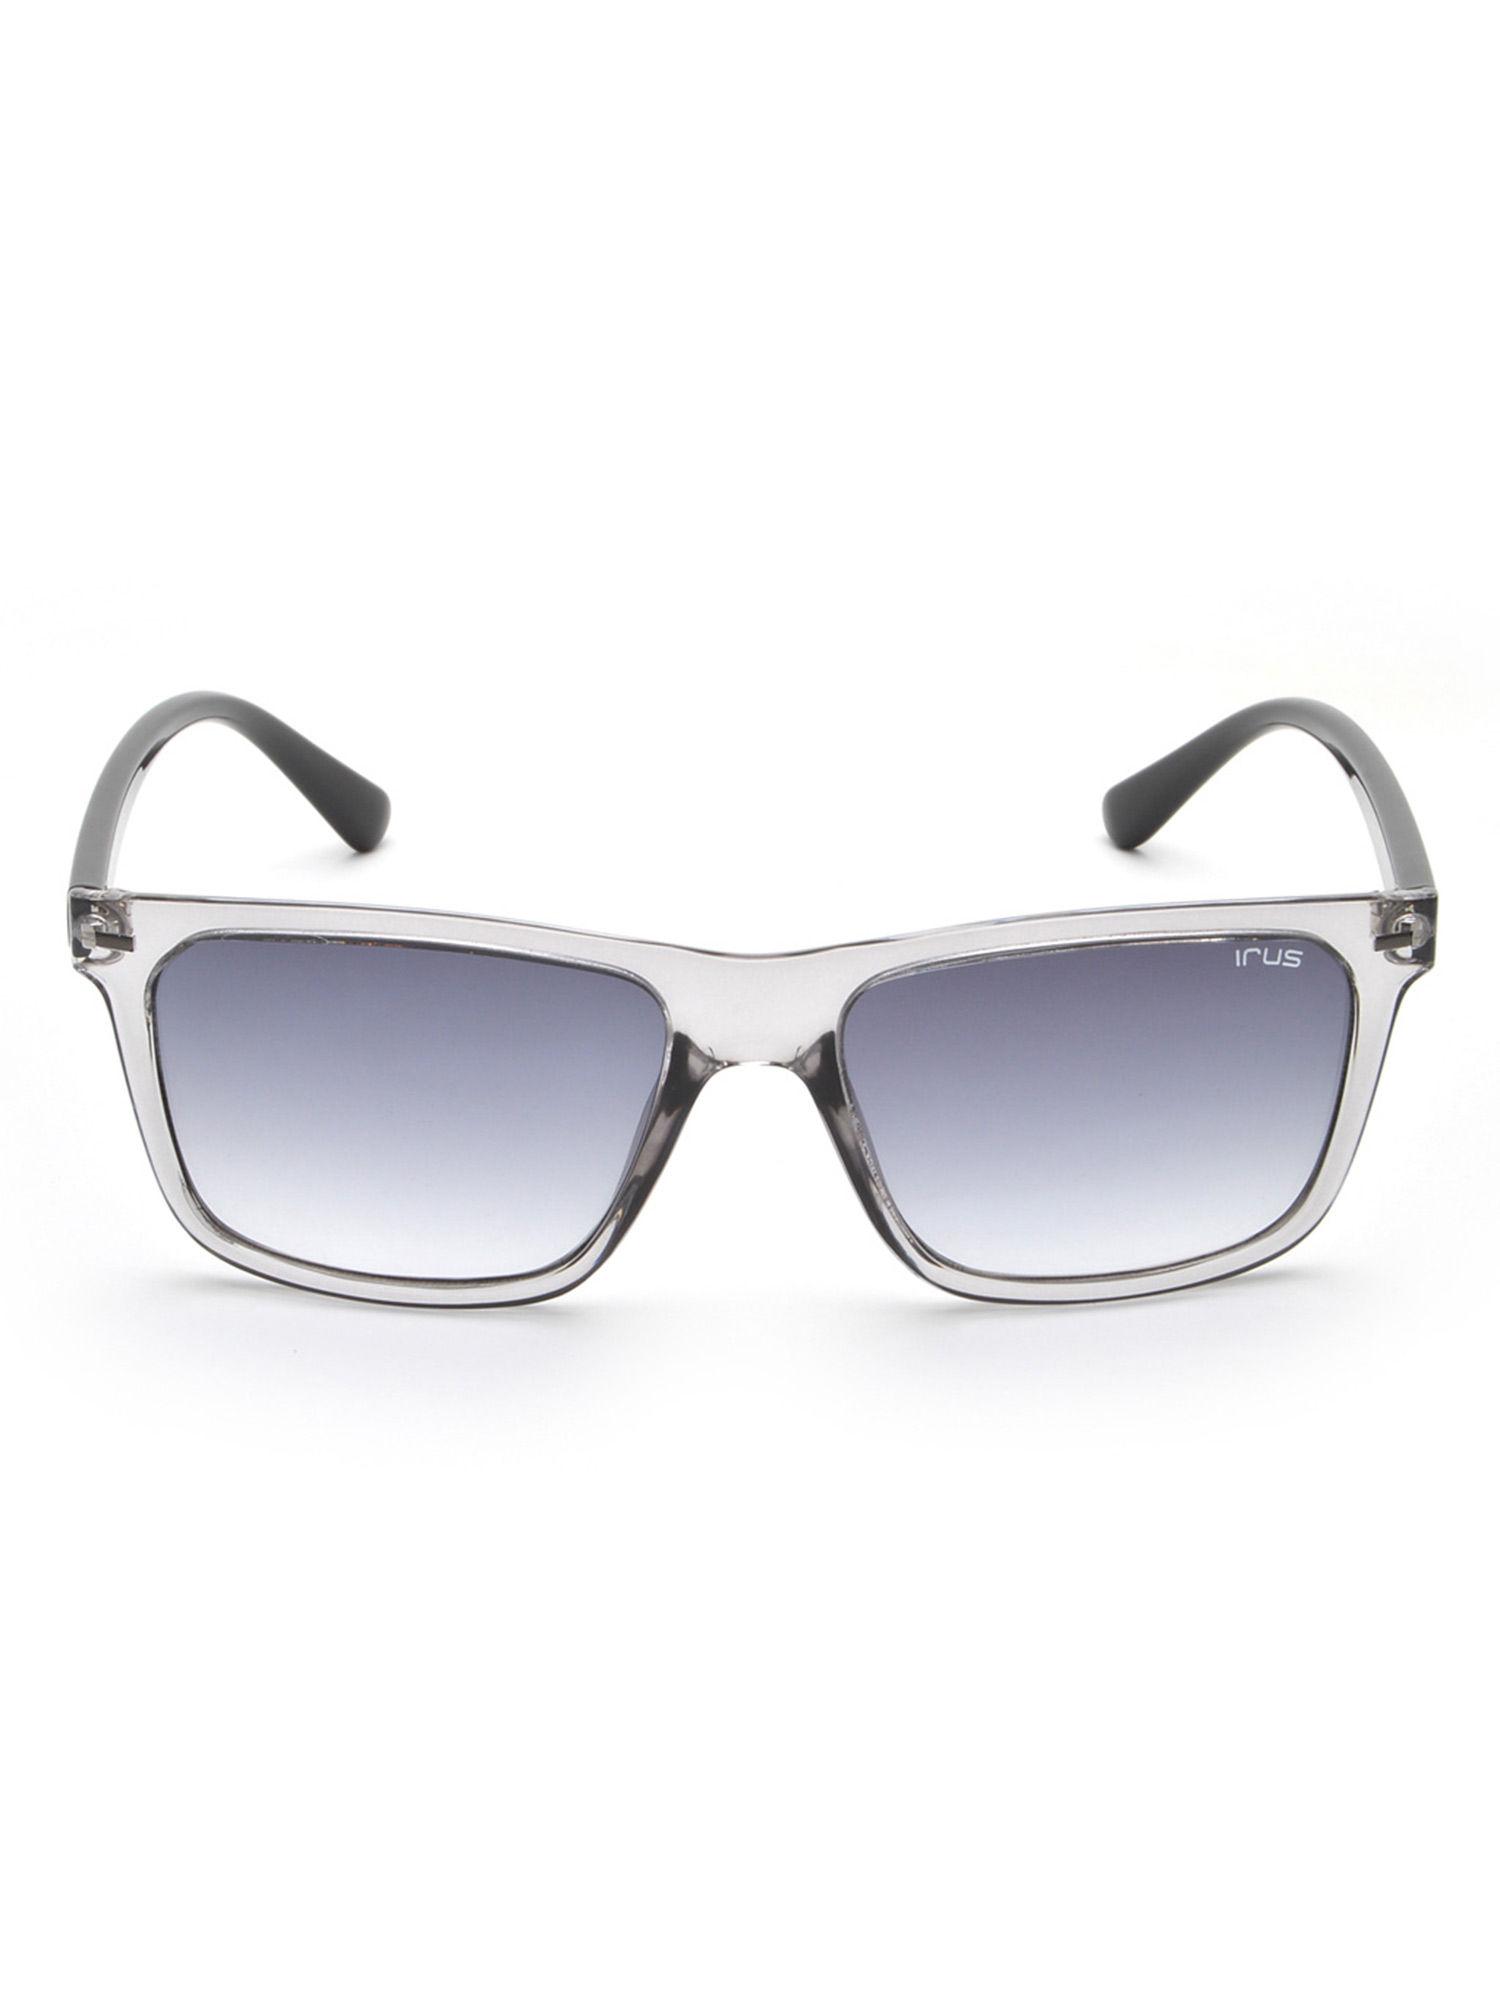 Grey Full Rim Rectangle Sunglasses -IRS1054C4SG